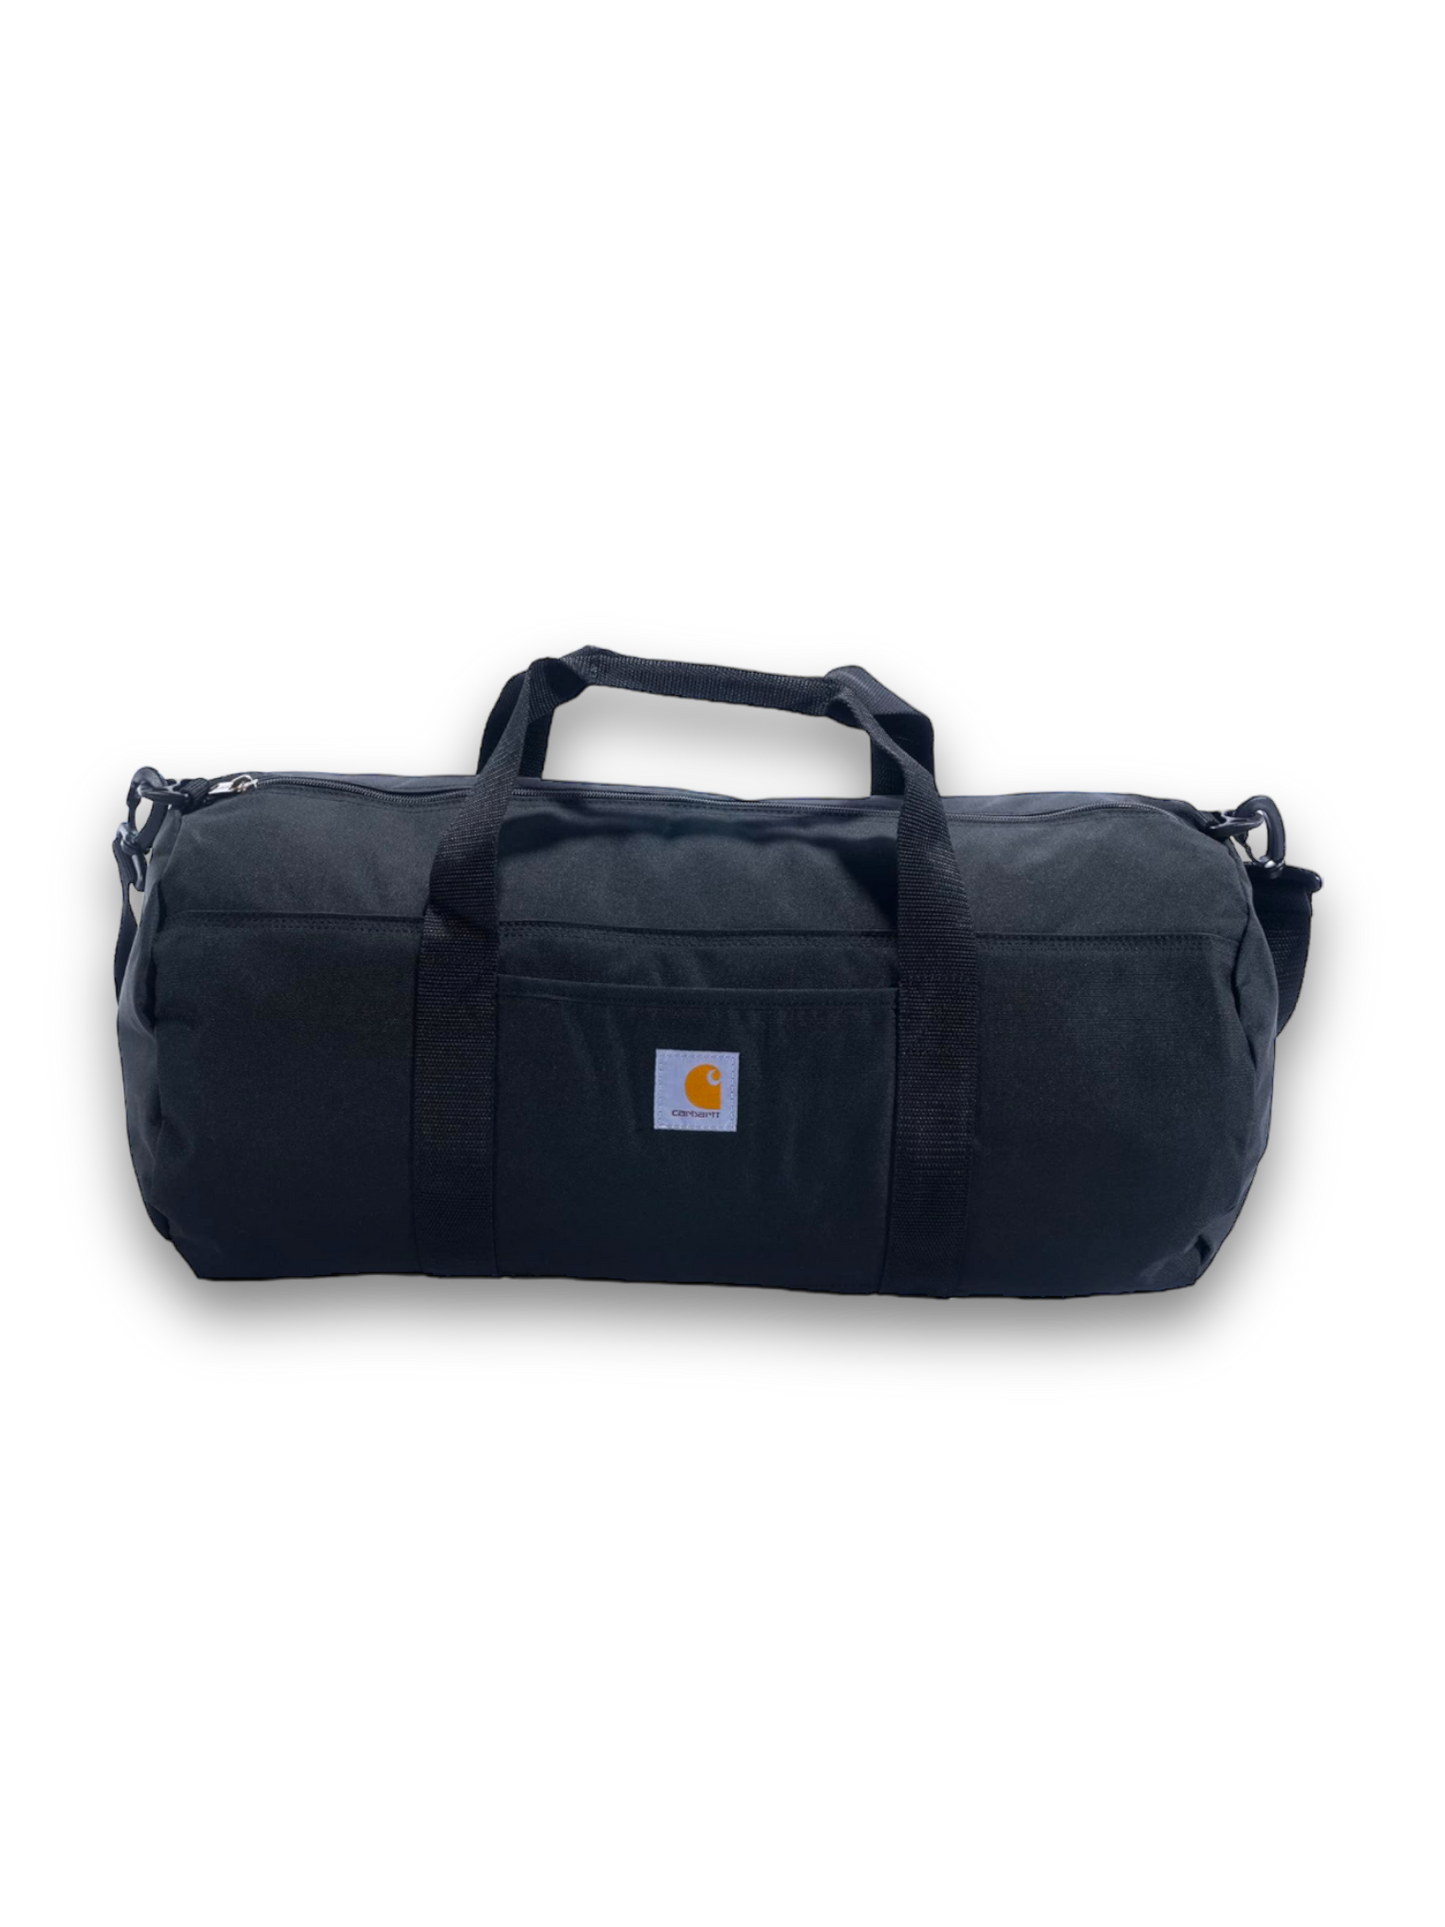 Duffle Bag - Carhartt Packable